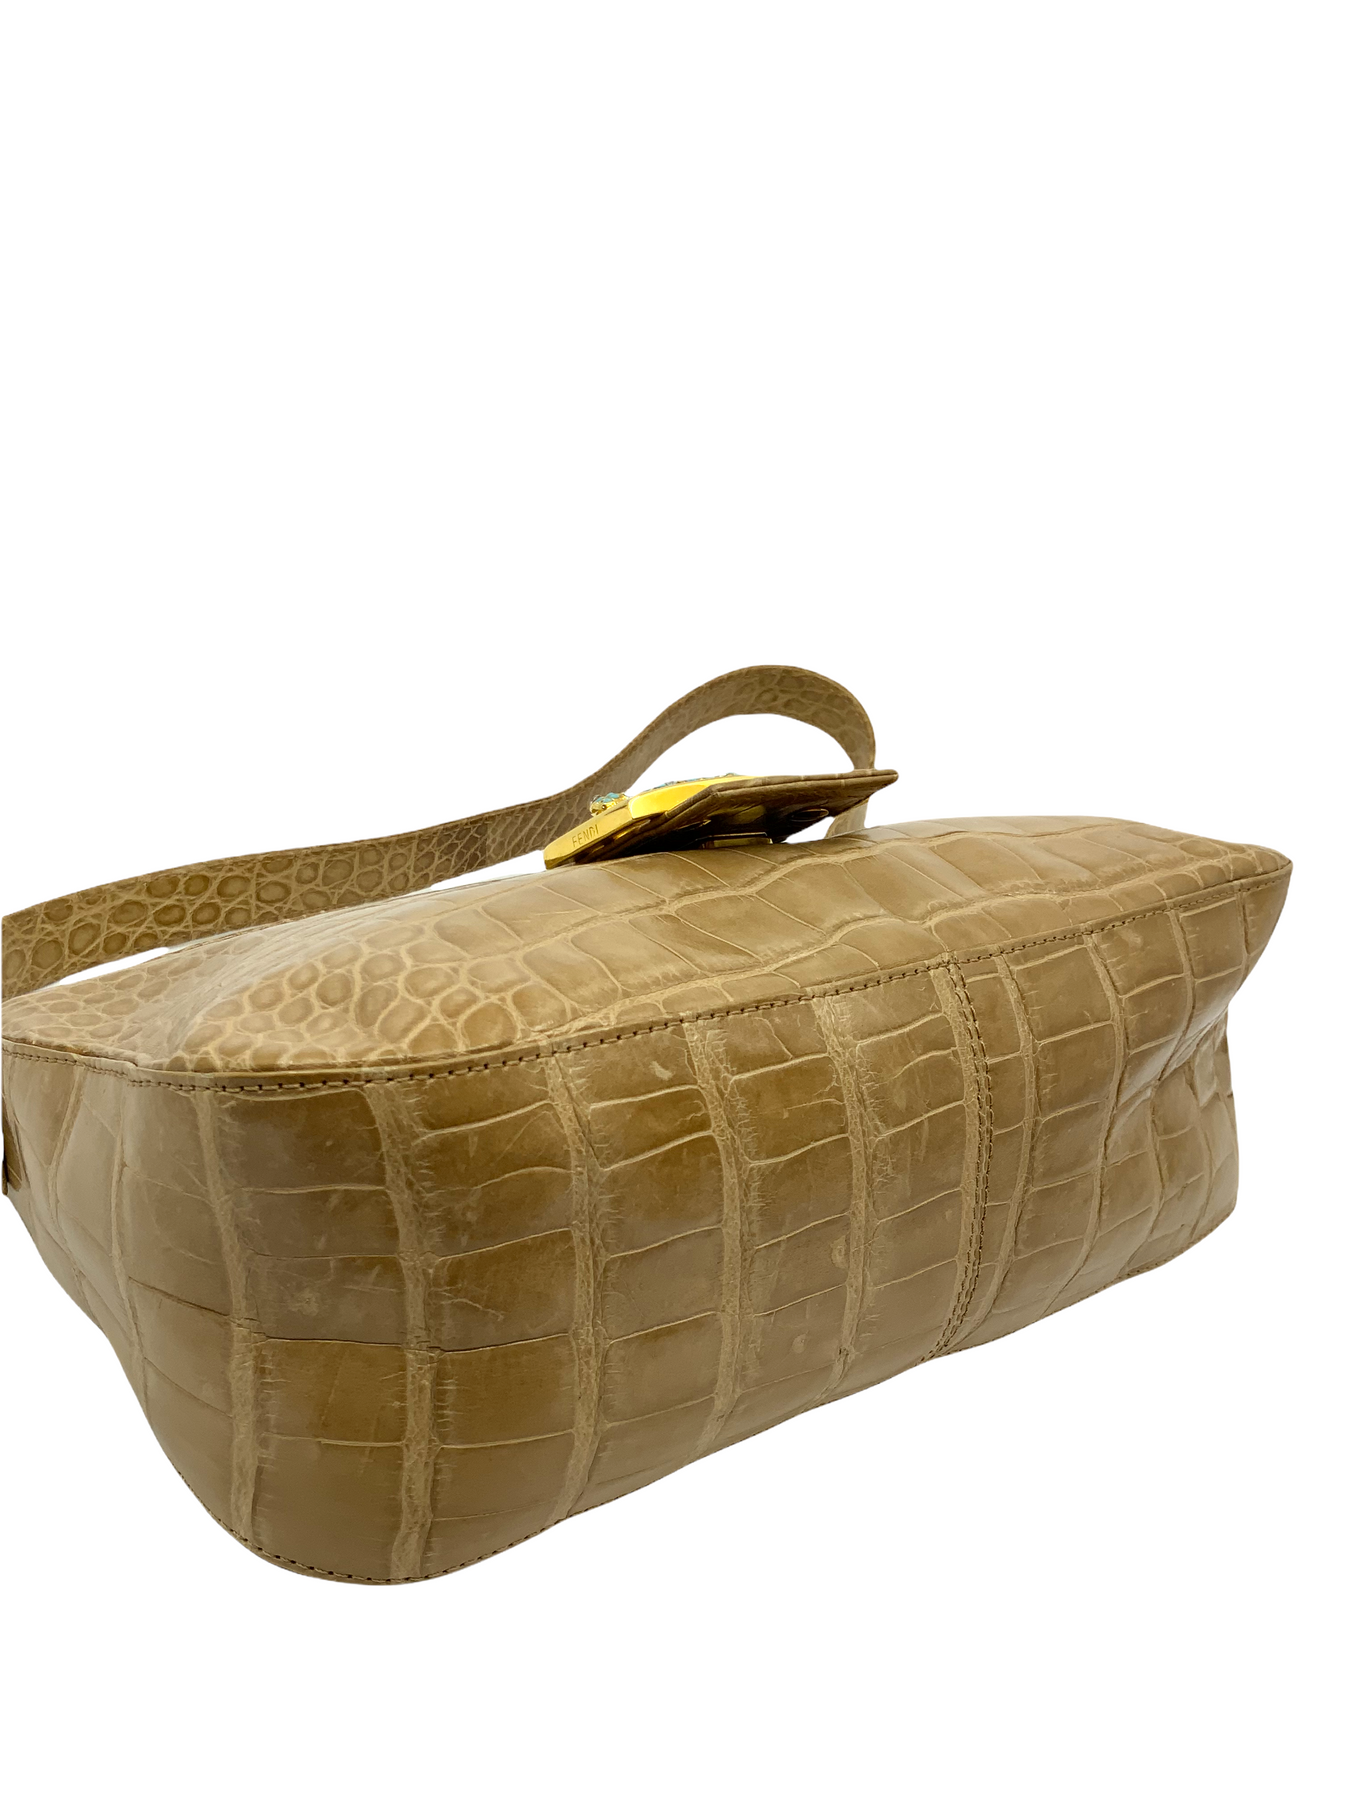 Fendi, Bags, Rare Vintage Fendi Crocodile Skin Baguette Bag